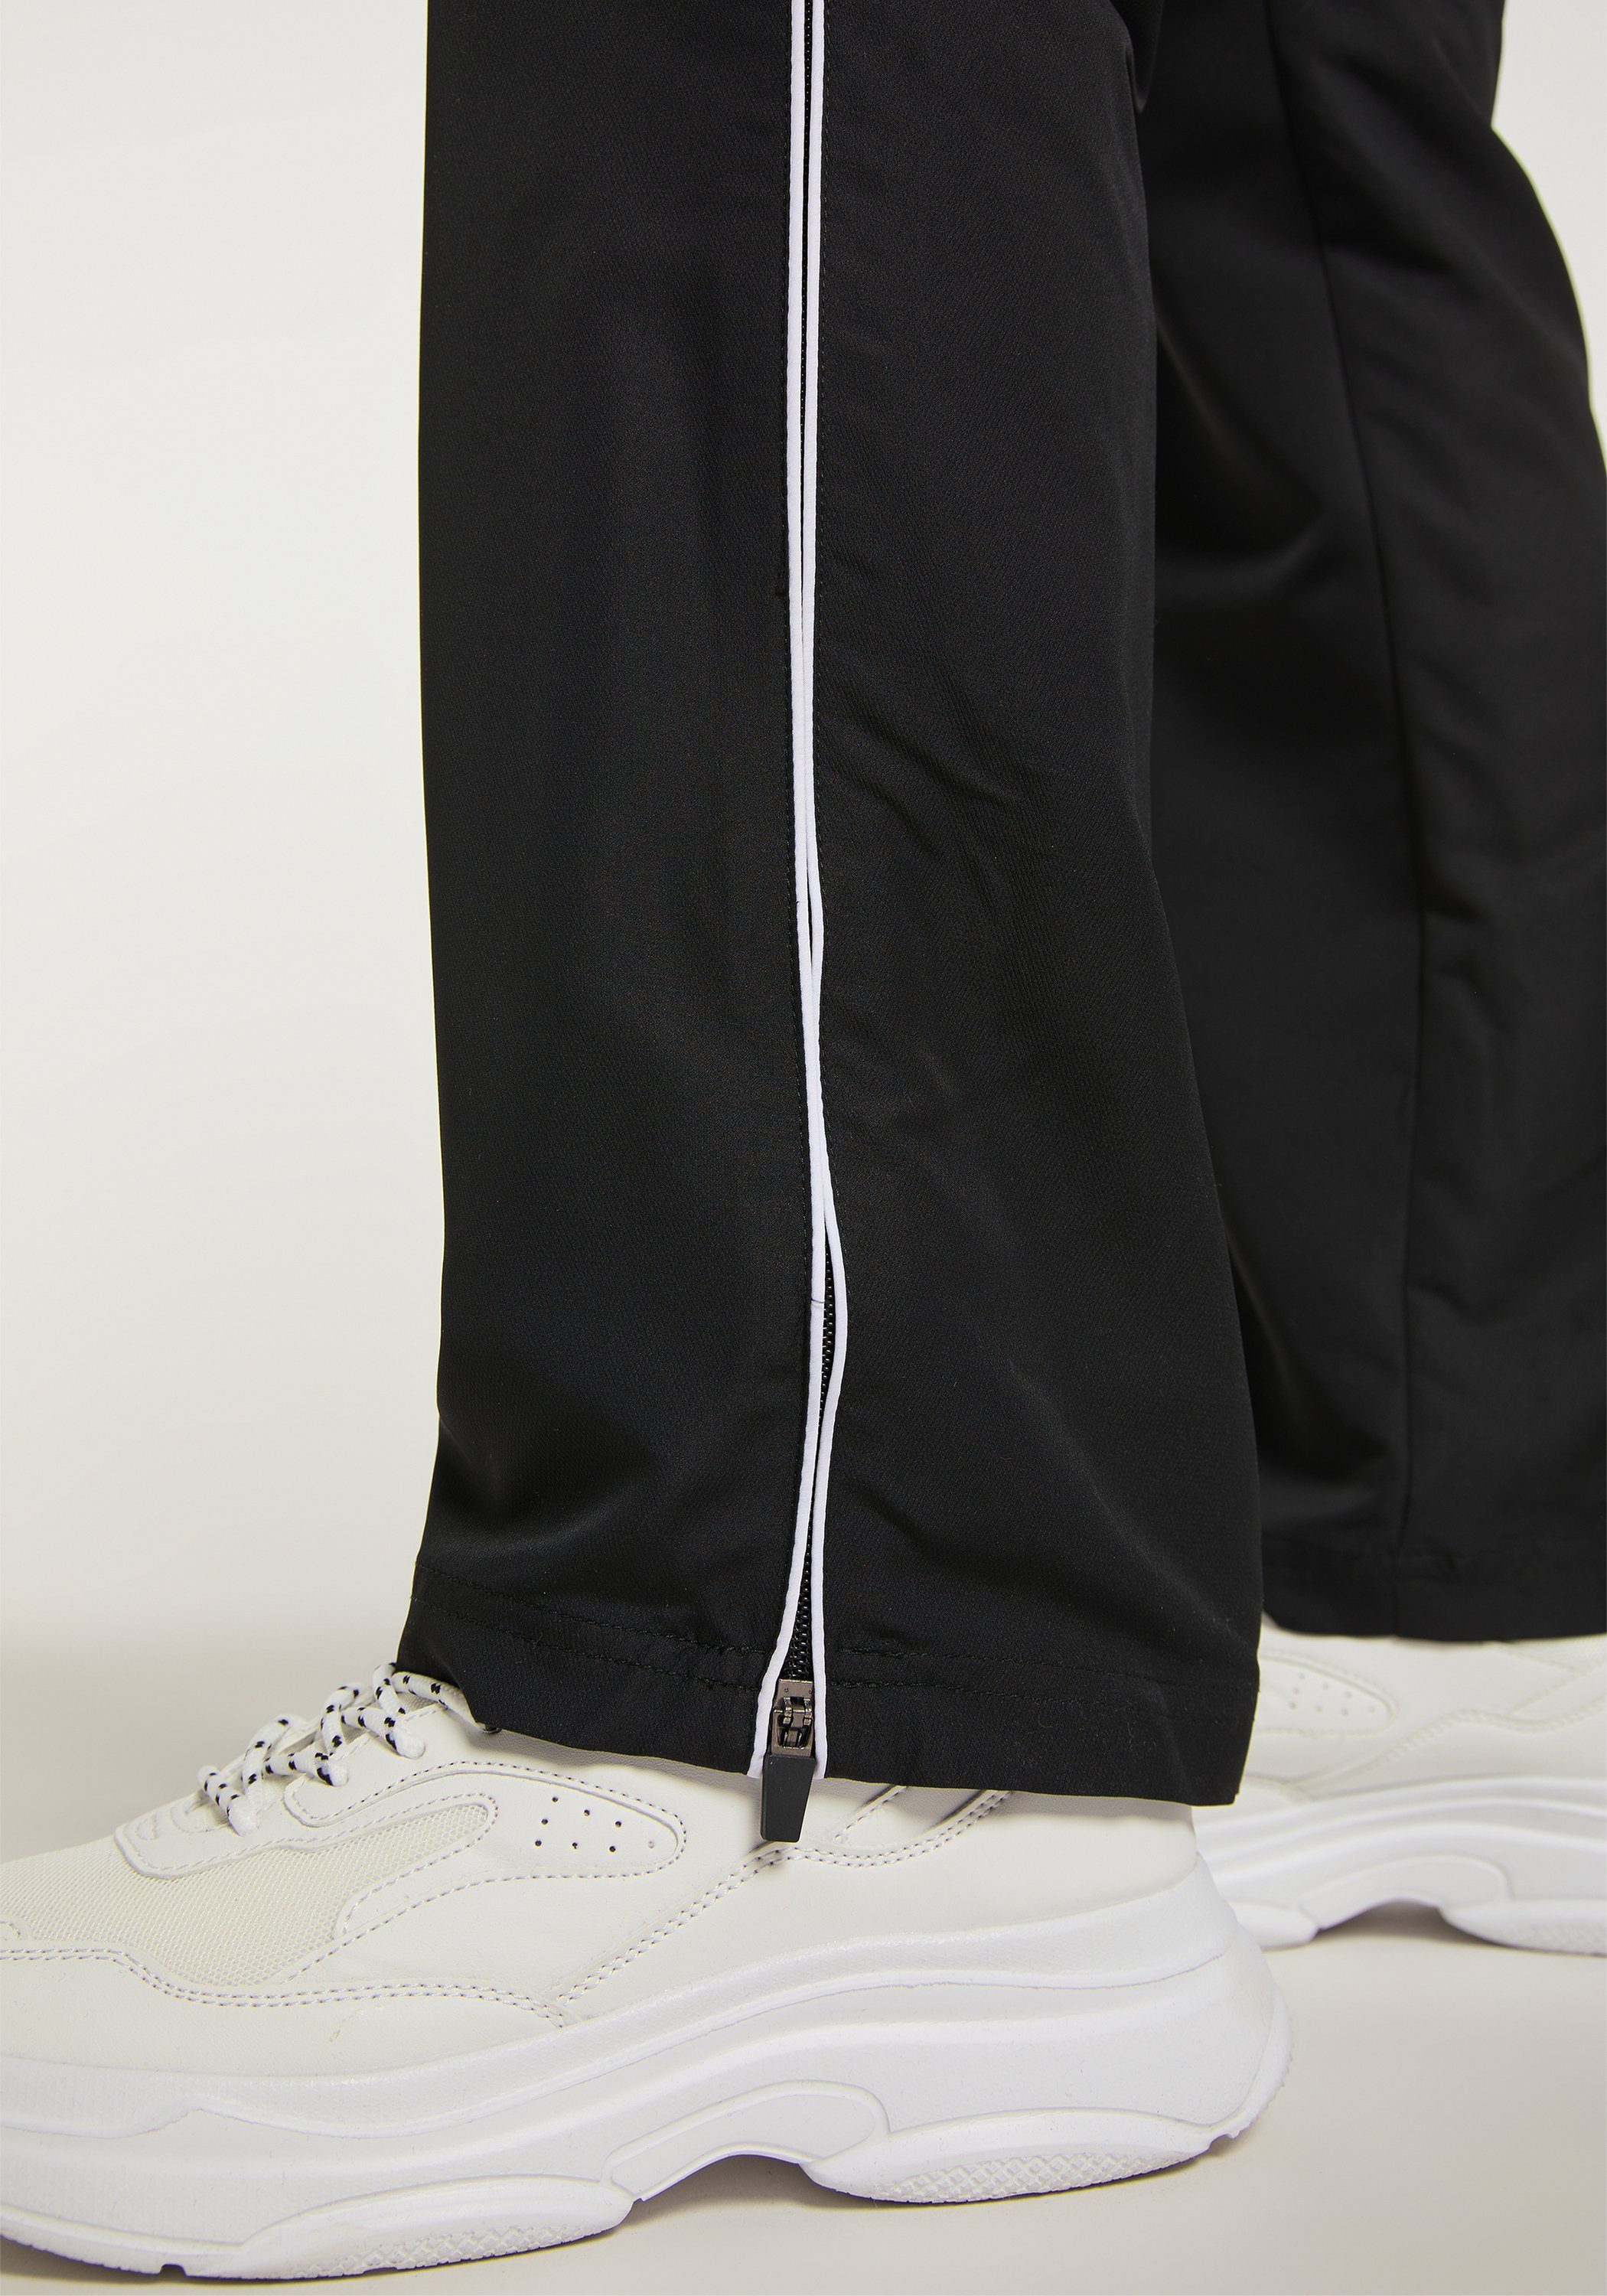 Joy MERRIT Sportswear black/white Sporthose Hose